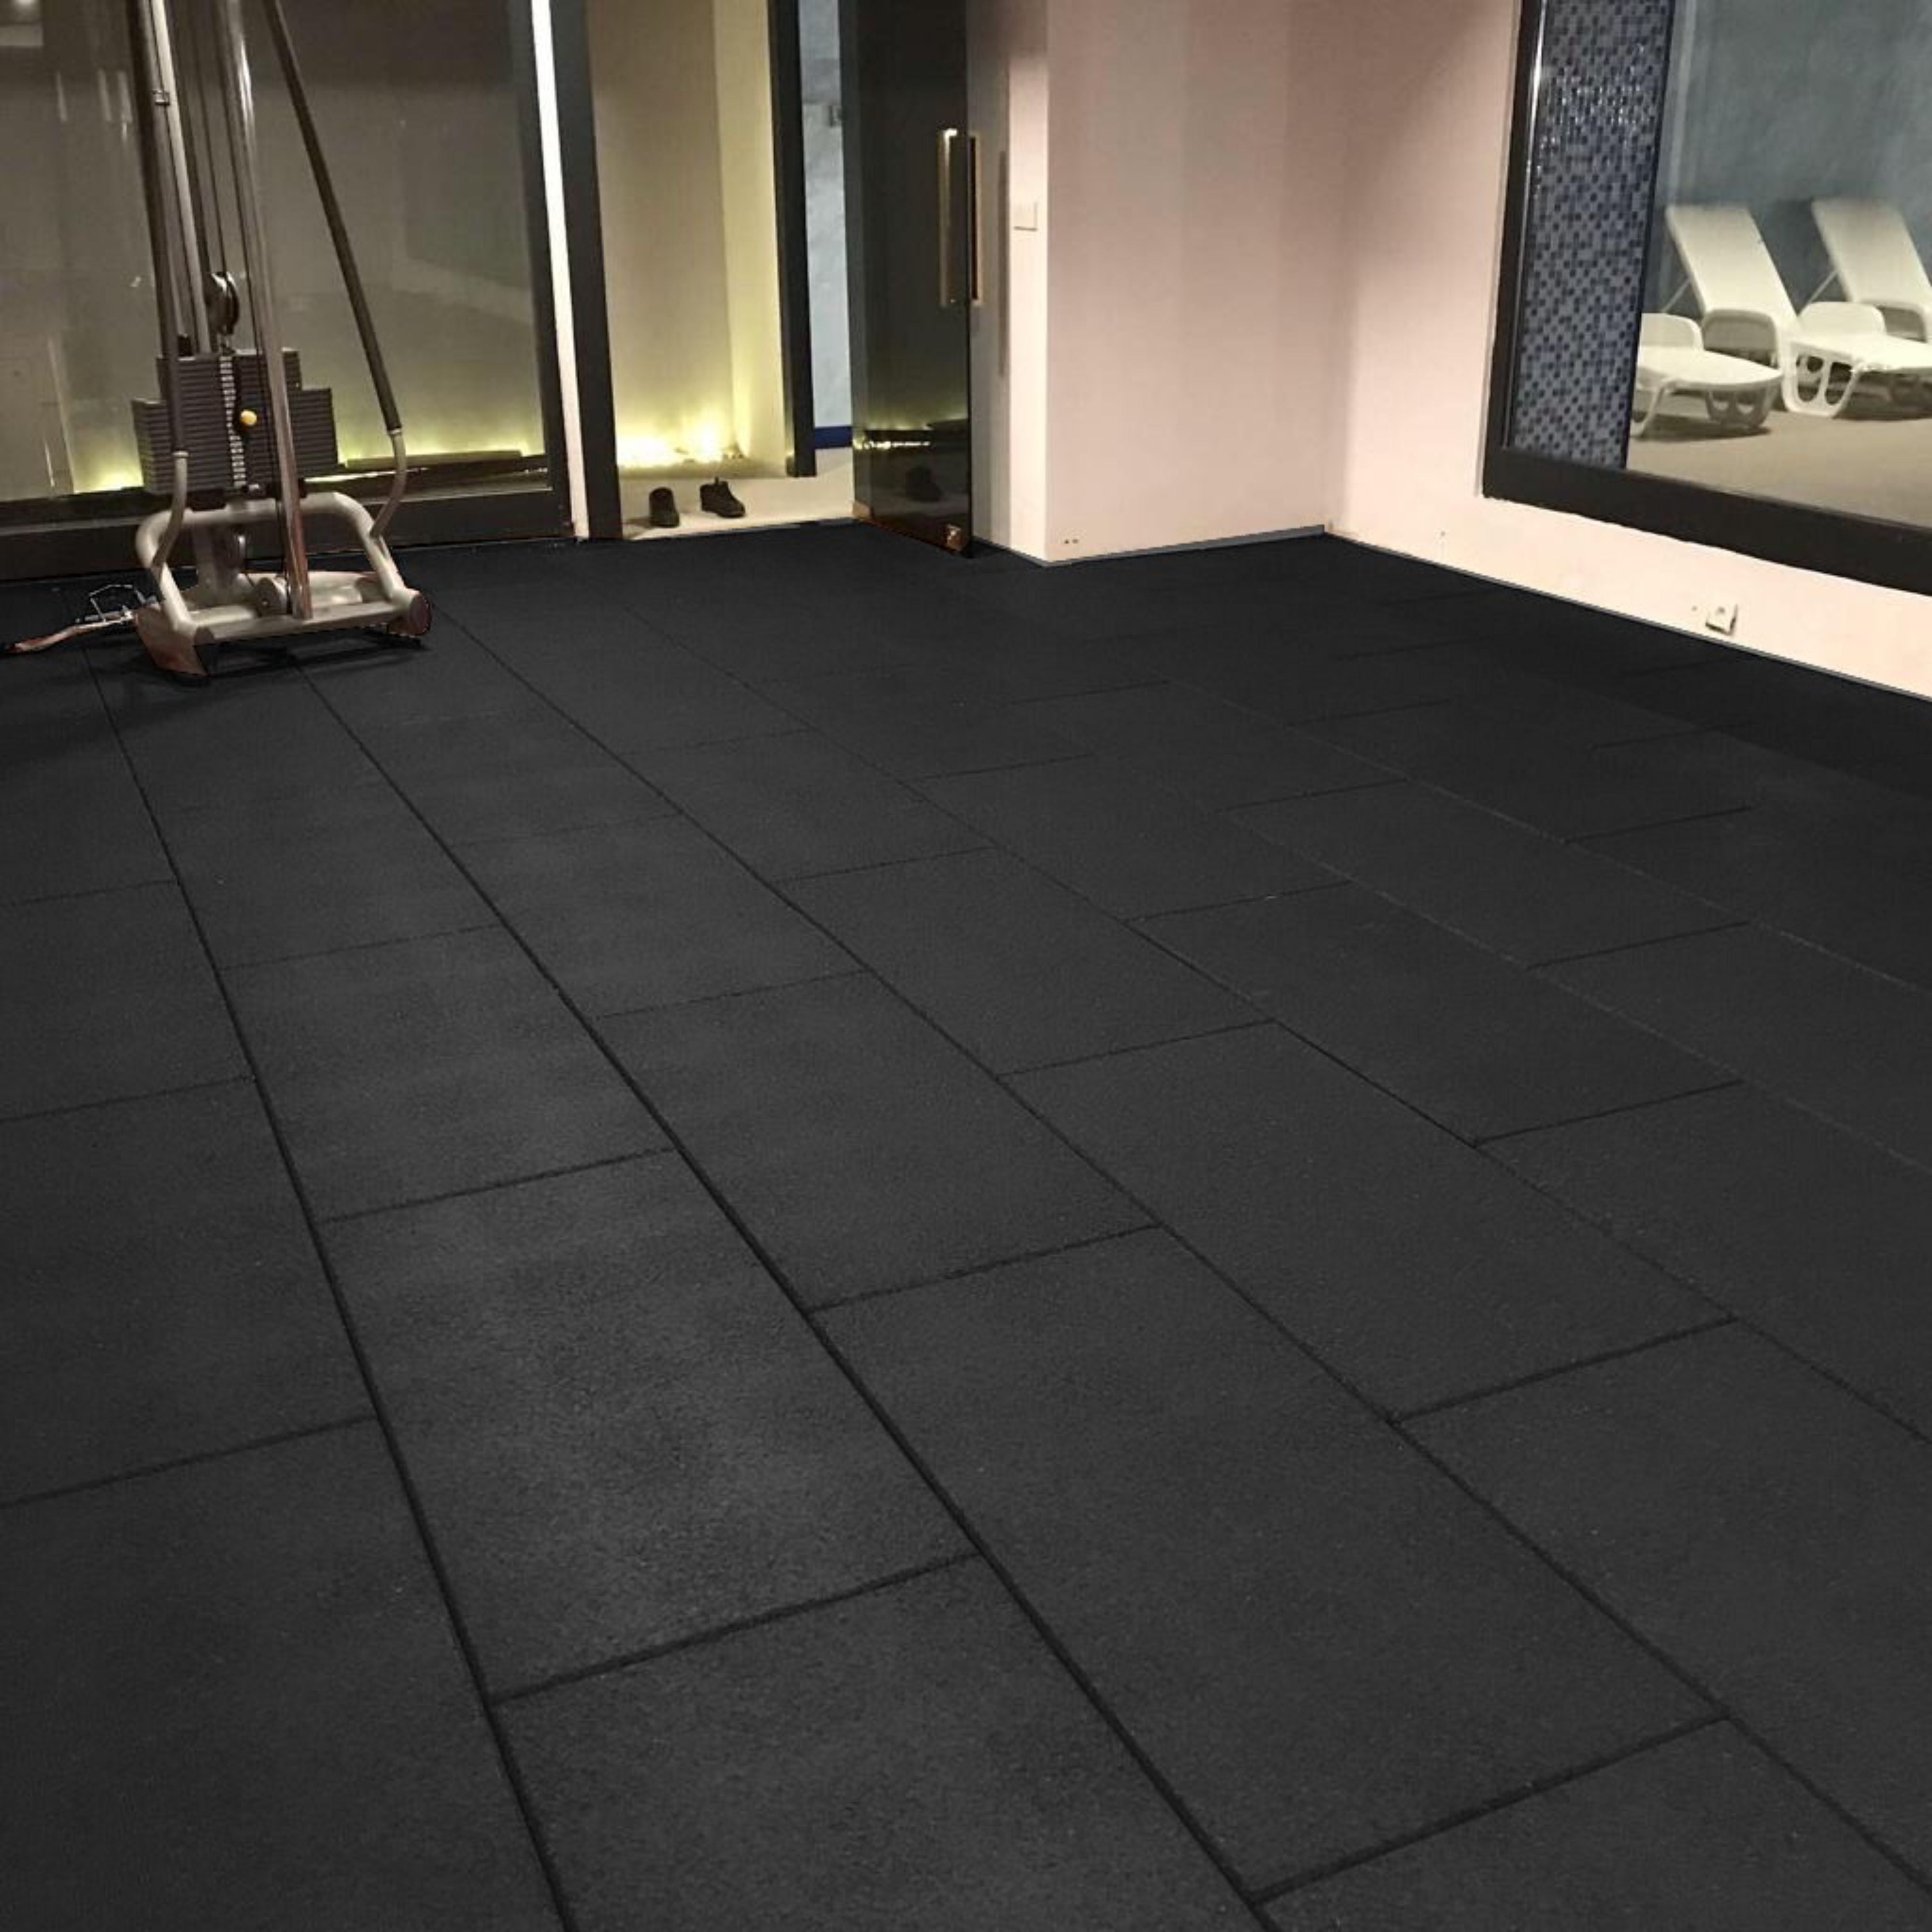 36m2 double garage package, BeFit Flatline Black Rubber Gym Flooring - Cannons UK